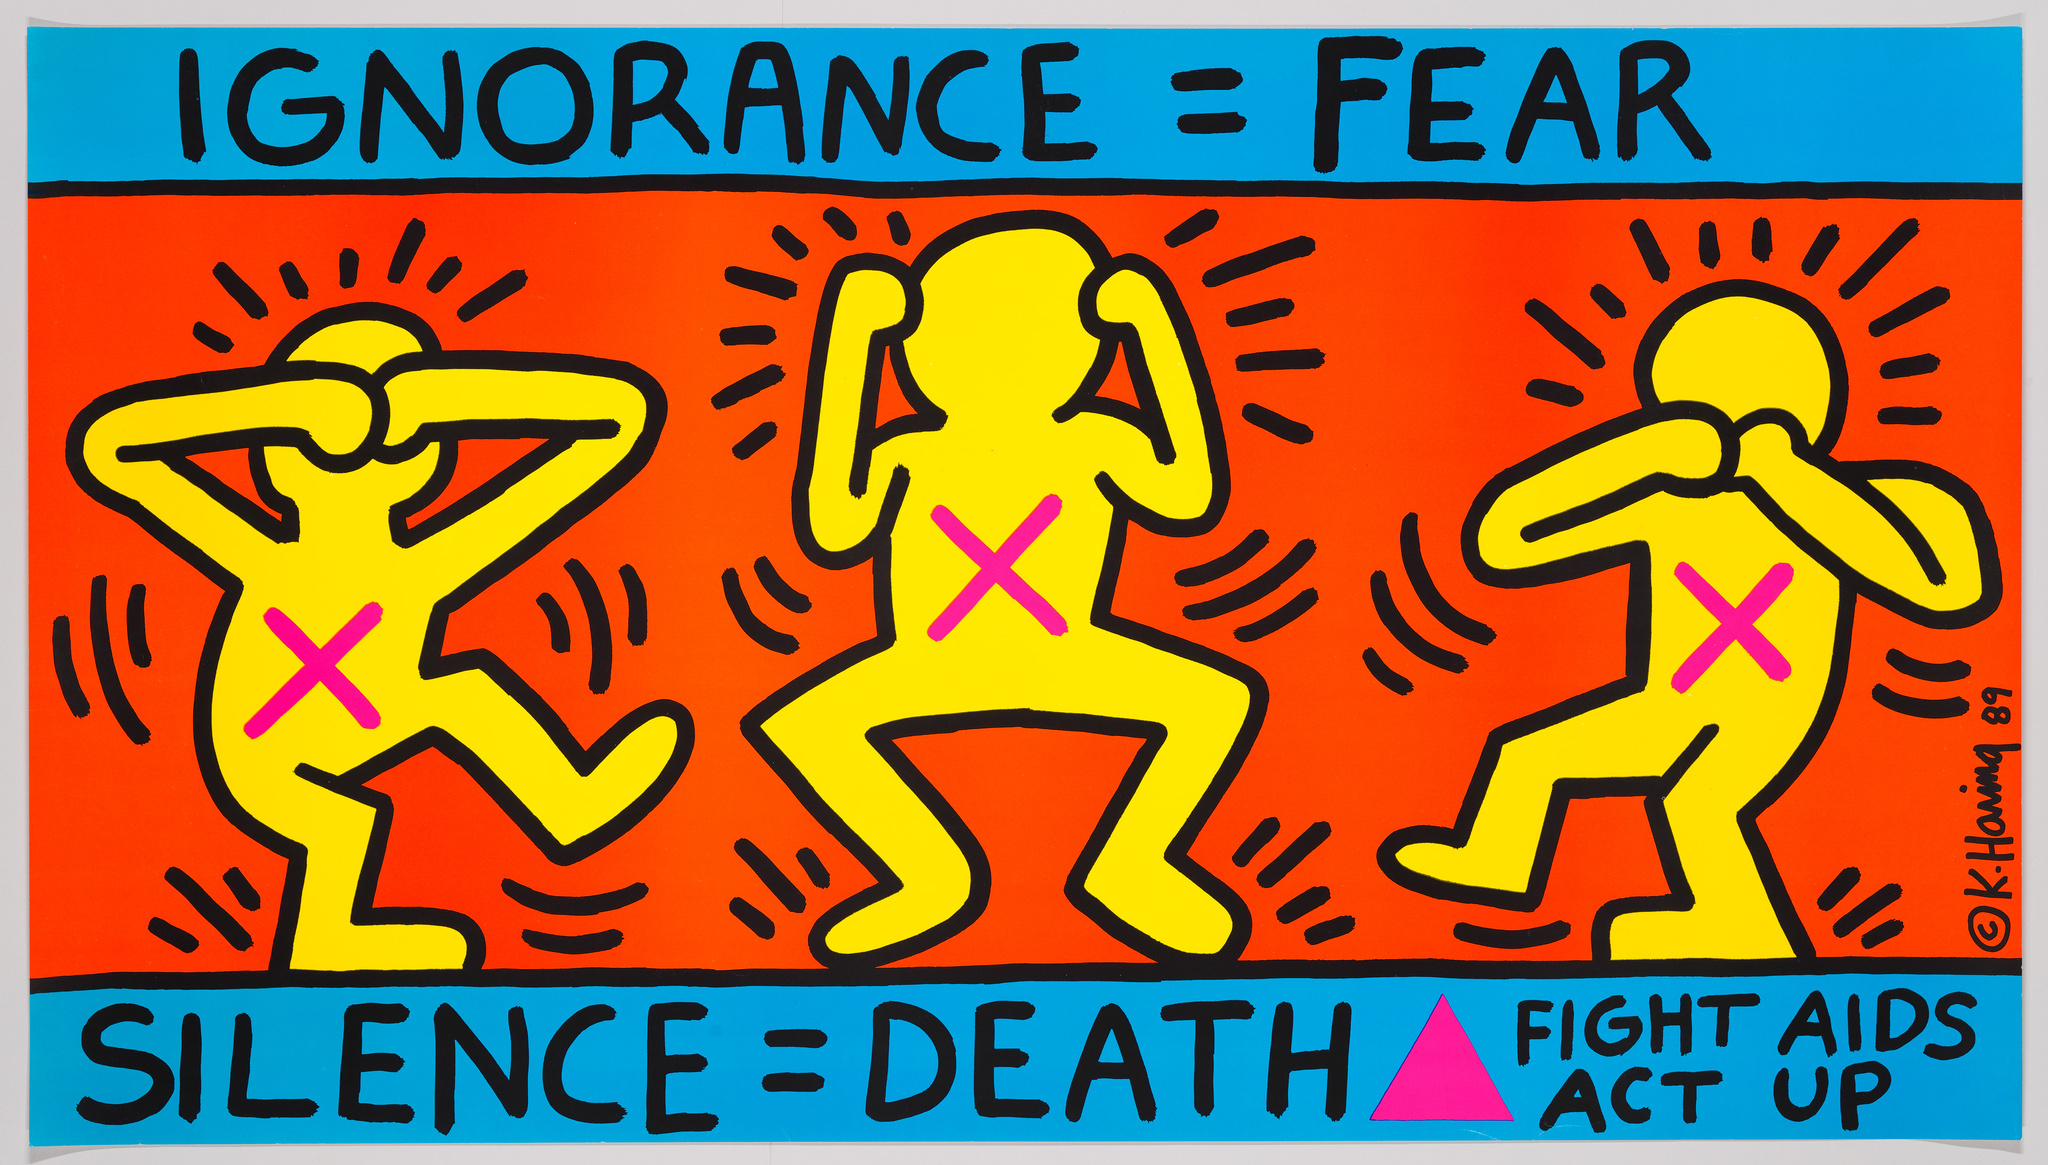 Ignorance fear silence death apple new macbook pro 2019 16 inch